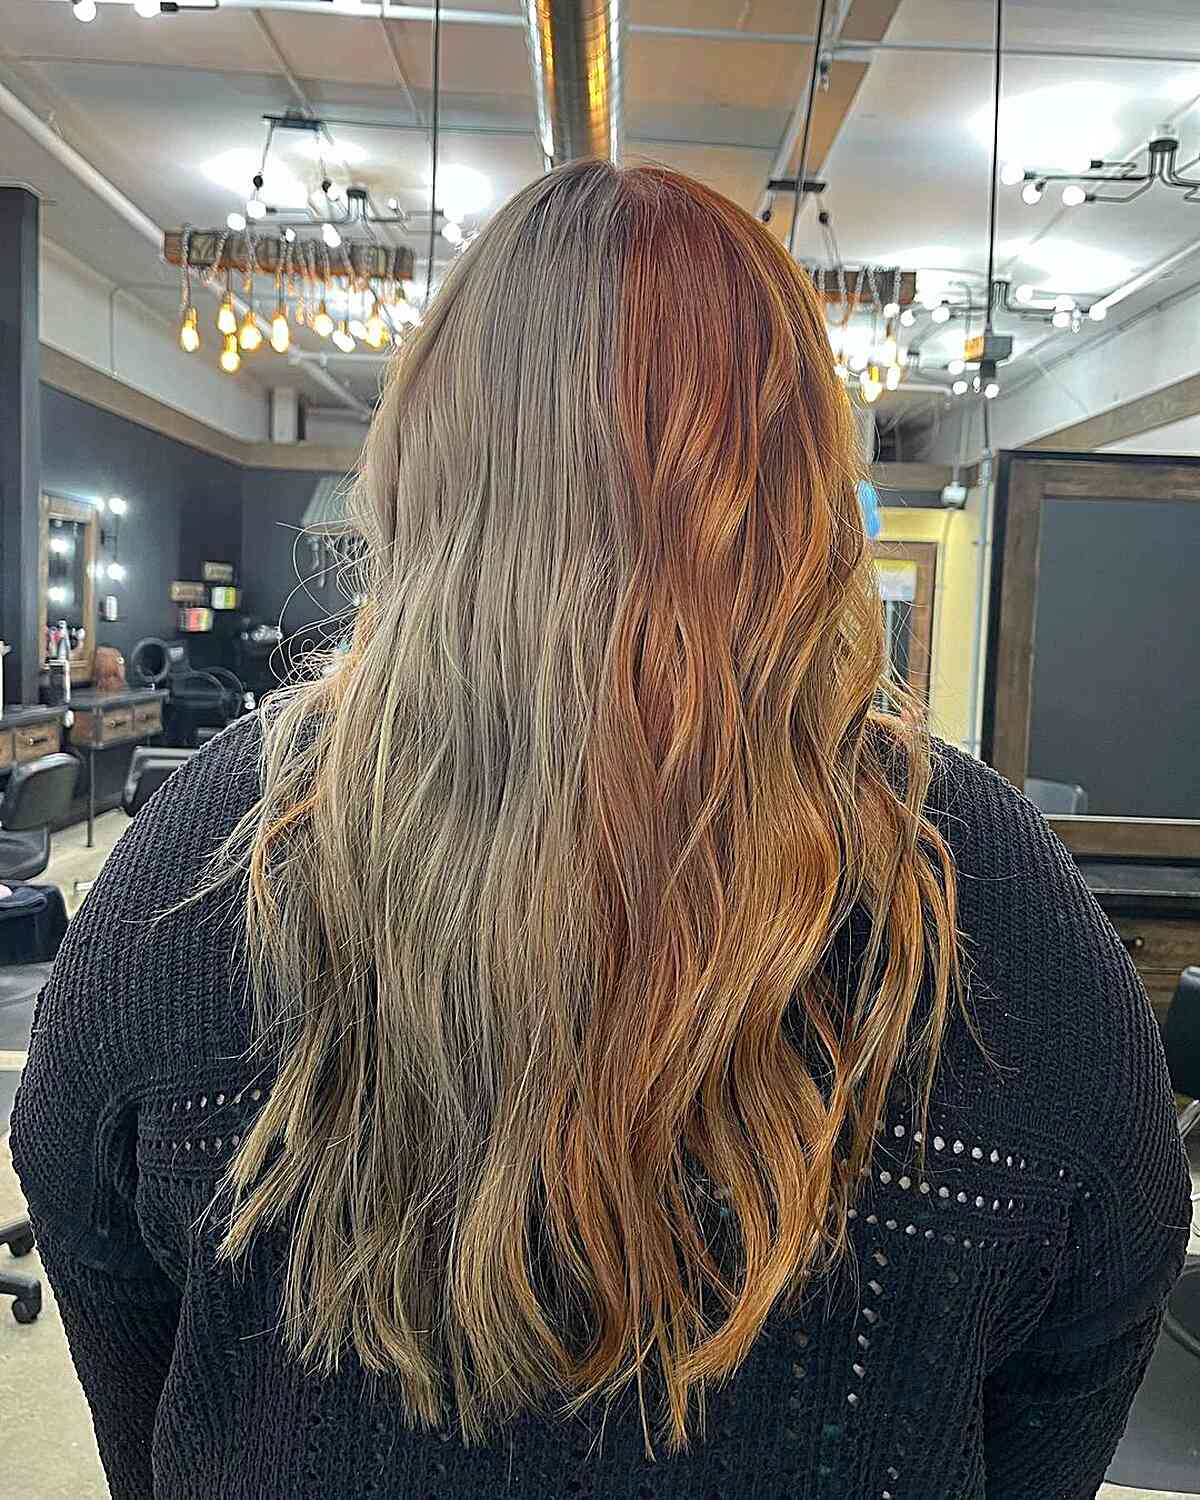 Mushroom-Copper Brown and Blonde Split Hair Dye with Long-Length Loose Waves